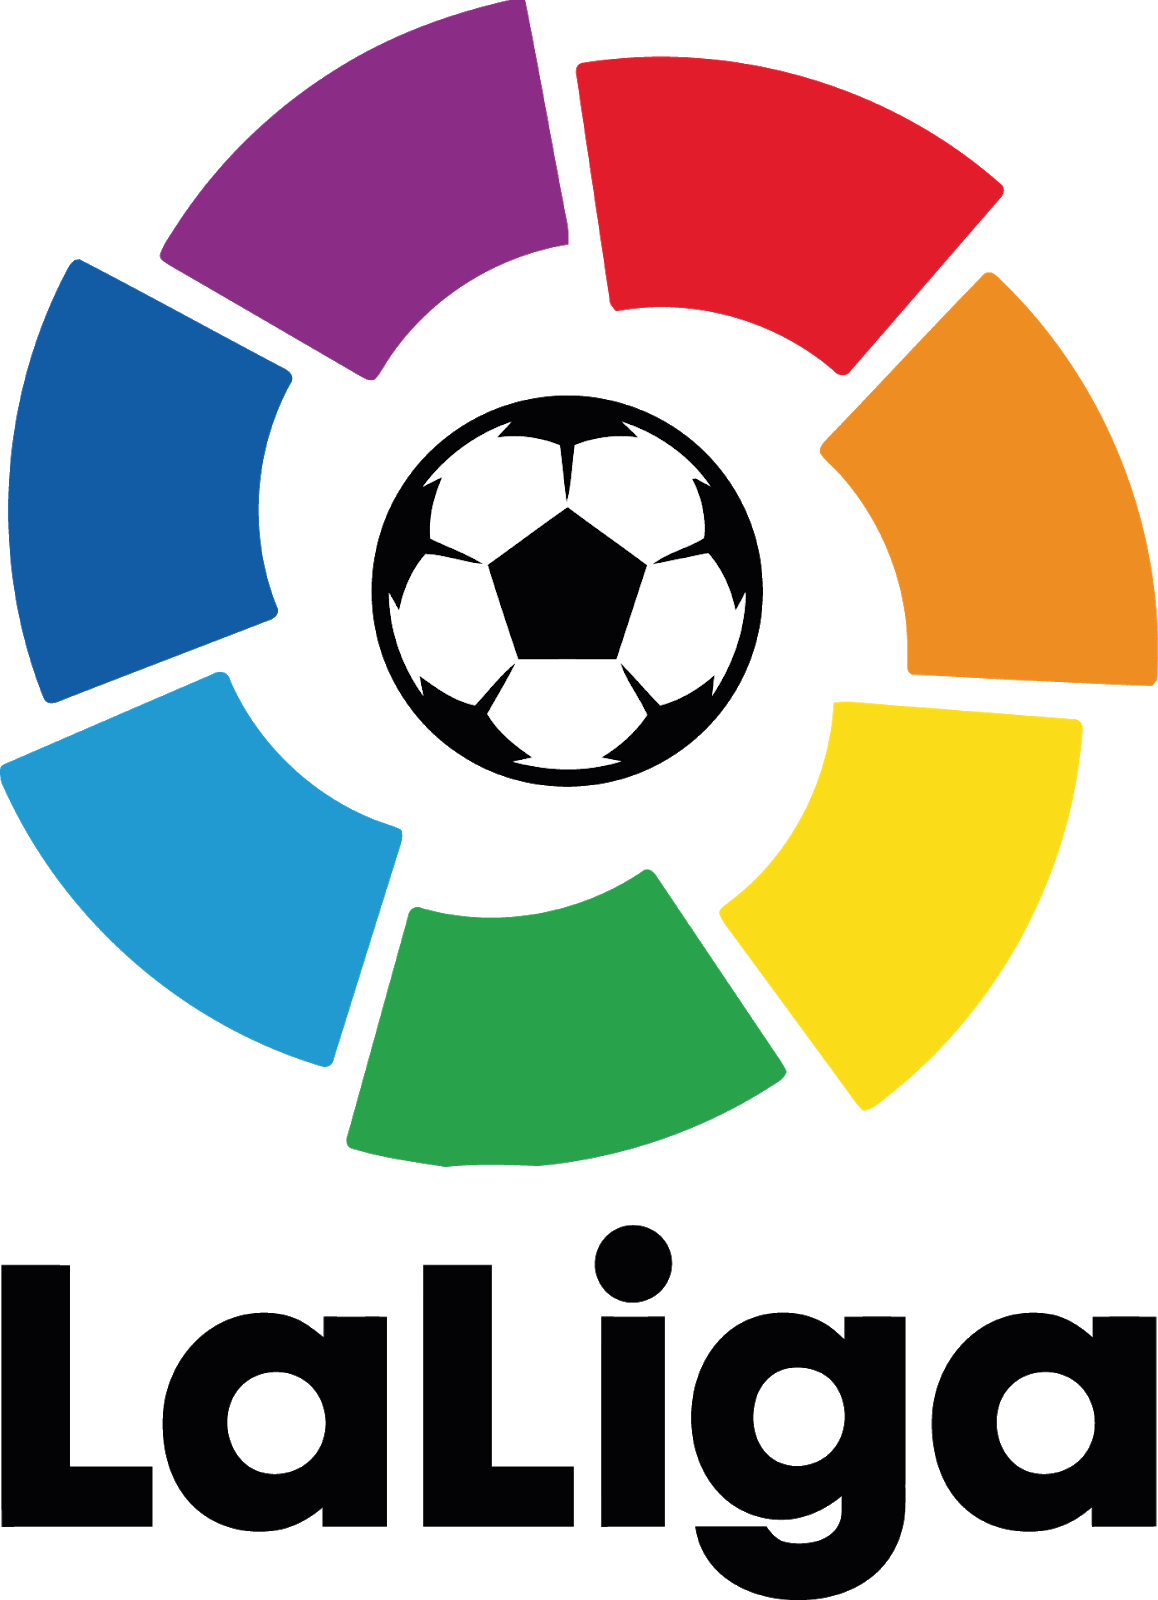 League logo for La Liga